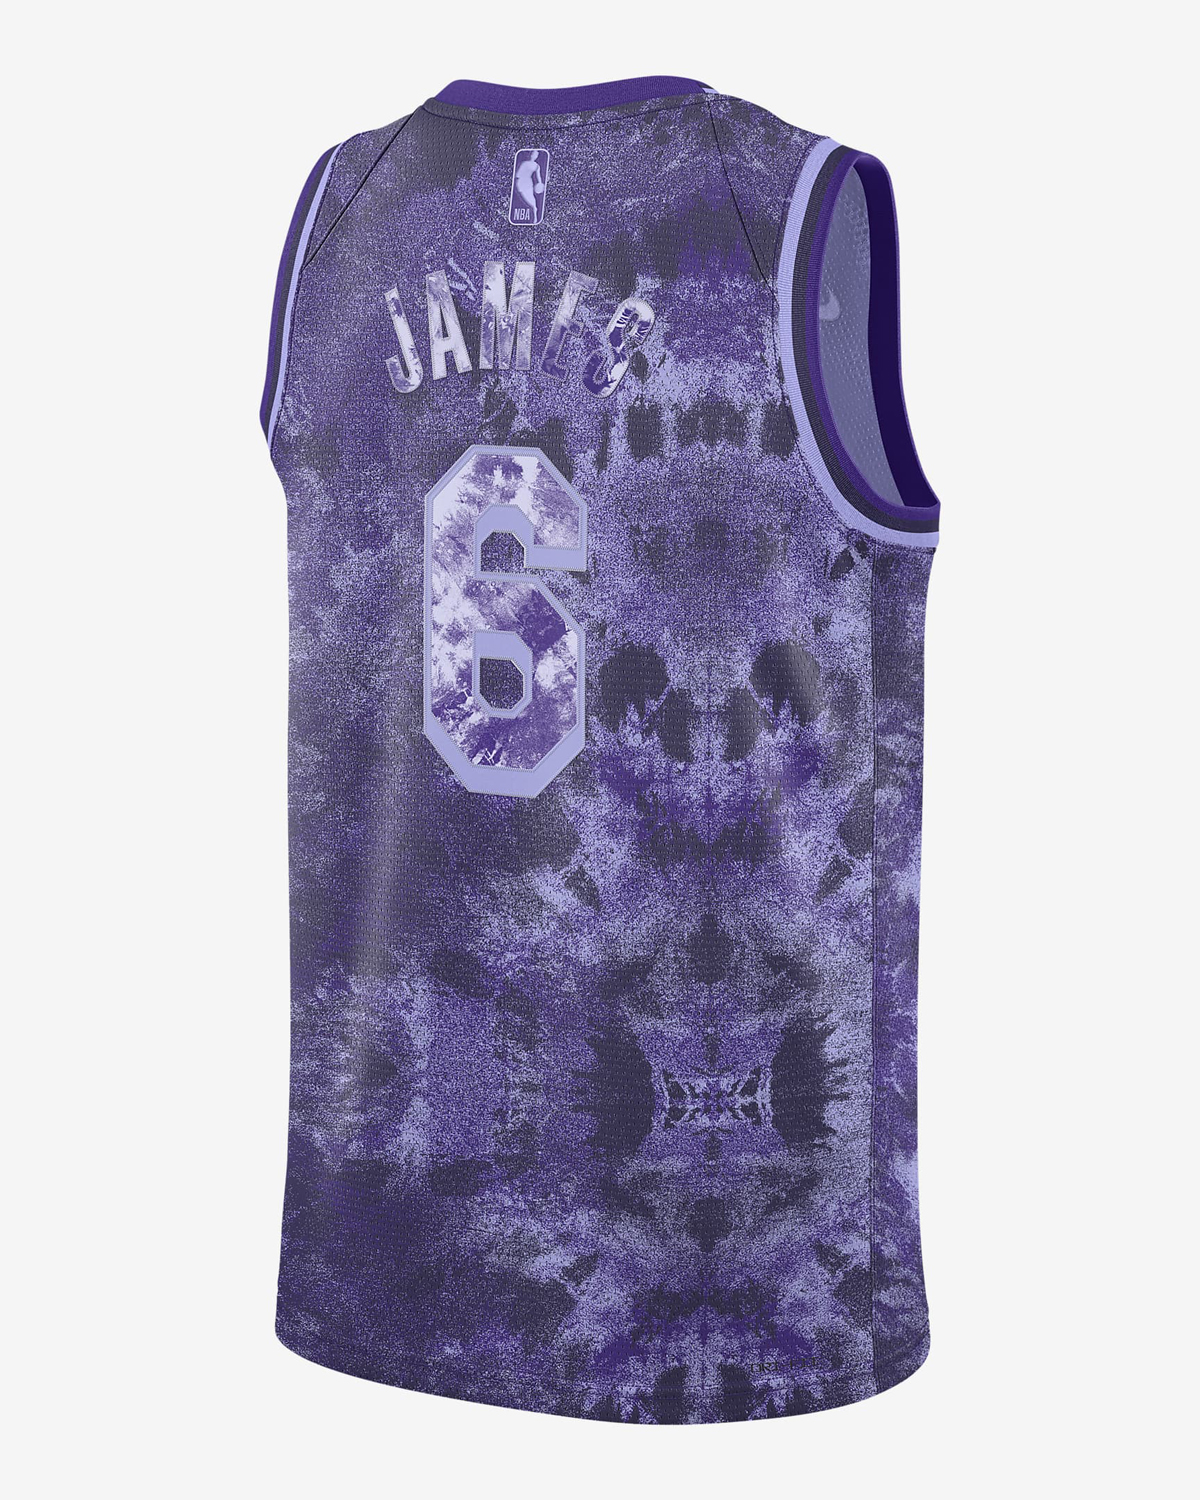 Nike-LeBron-James-Lakers-Select-Series-Jersey-2